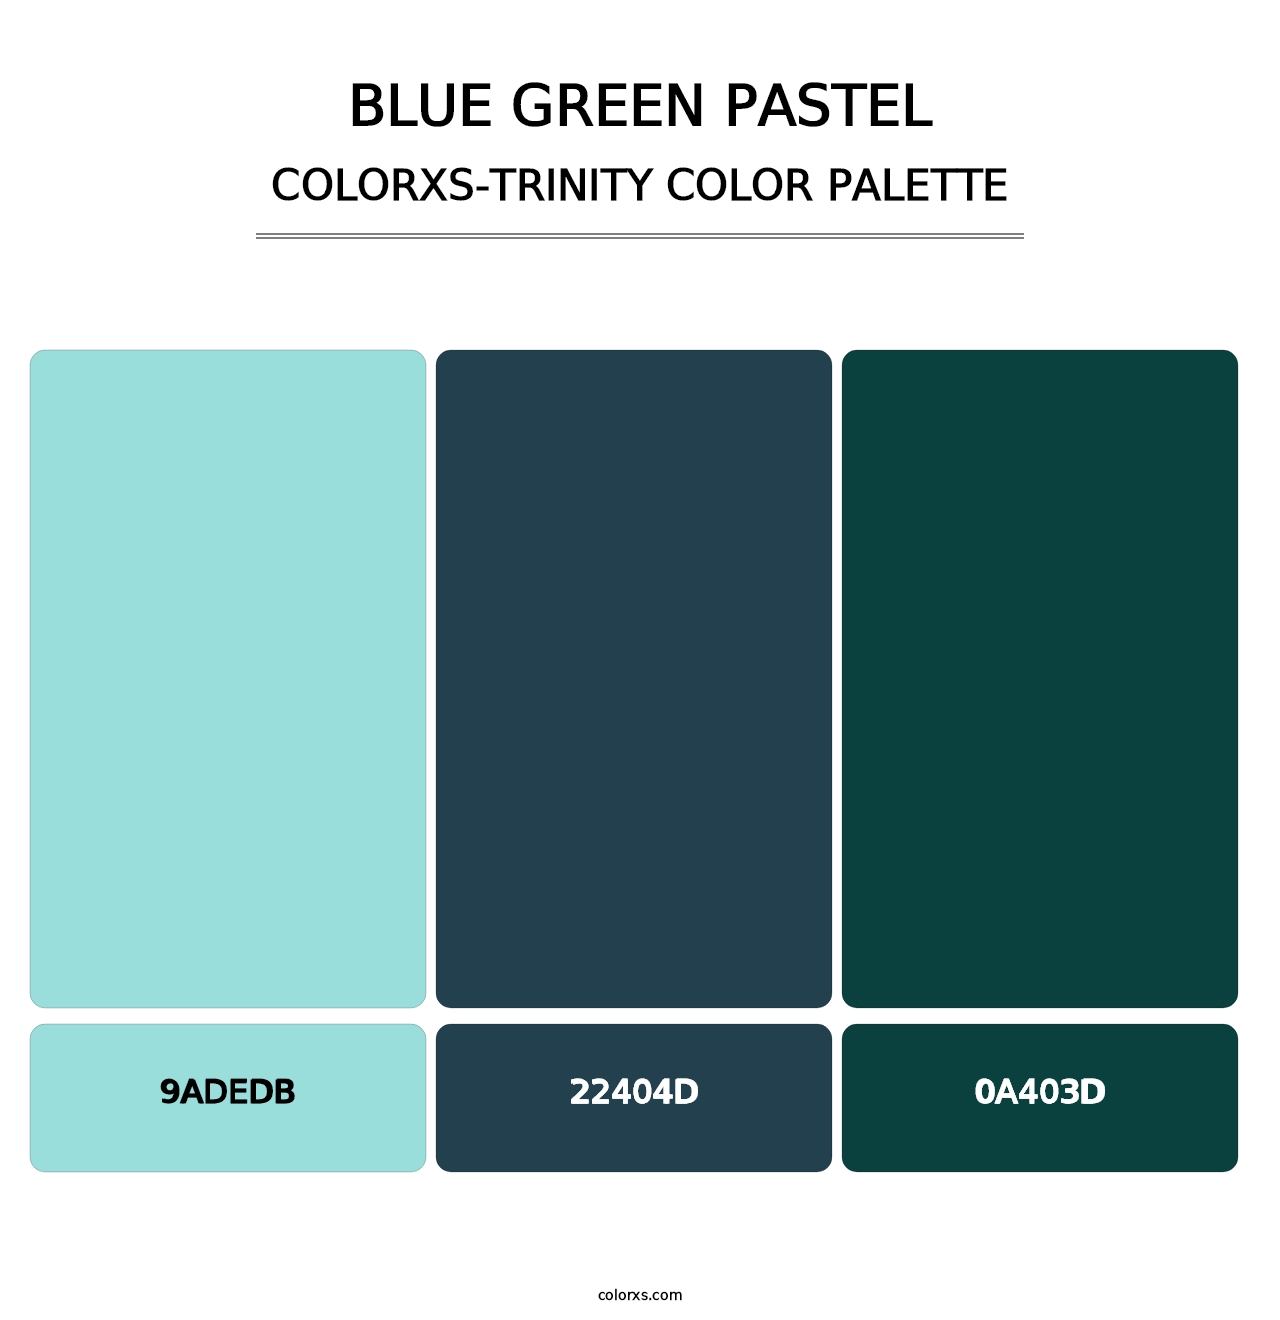 Blue Green Pastel - Colorxs Trinity Palette